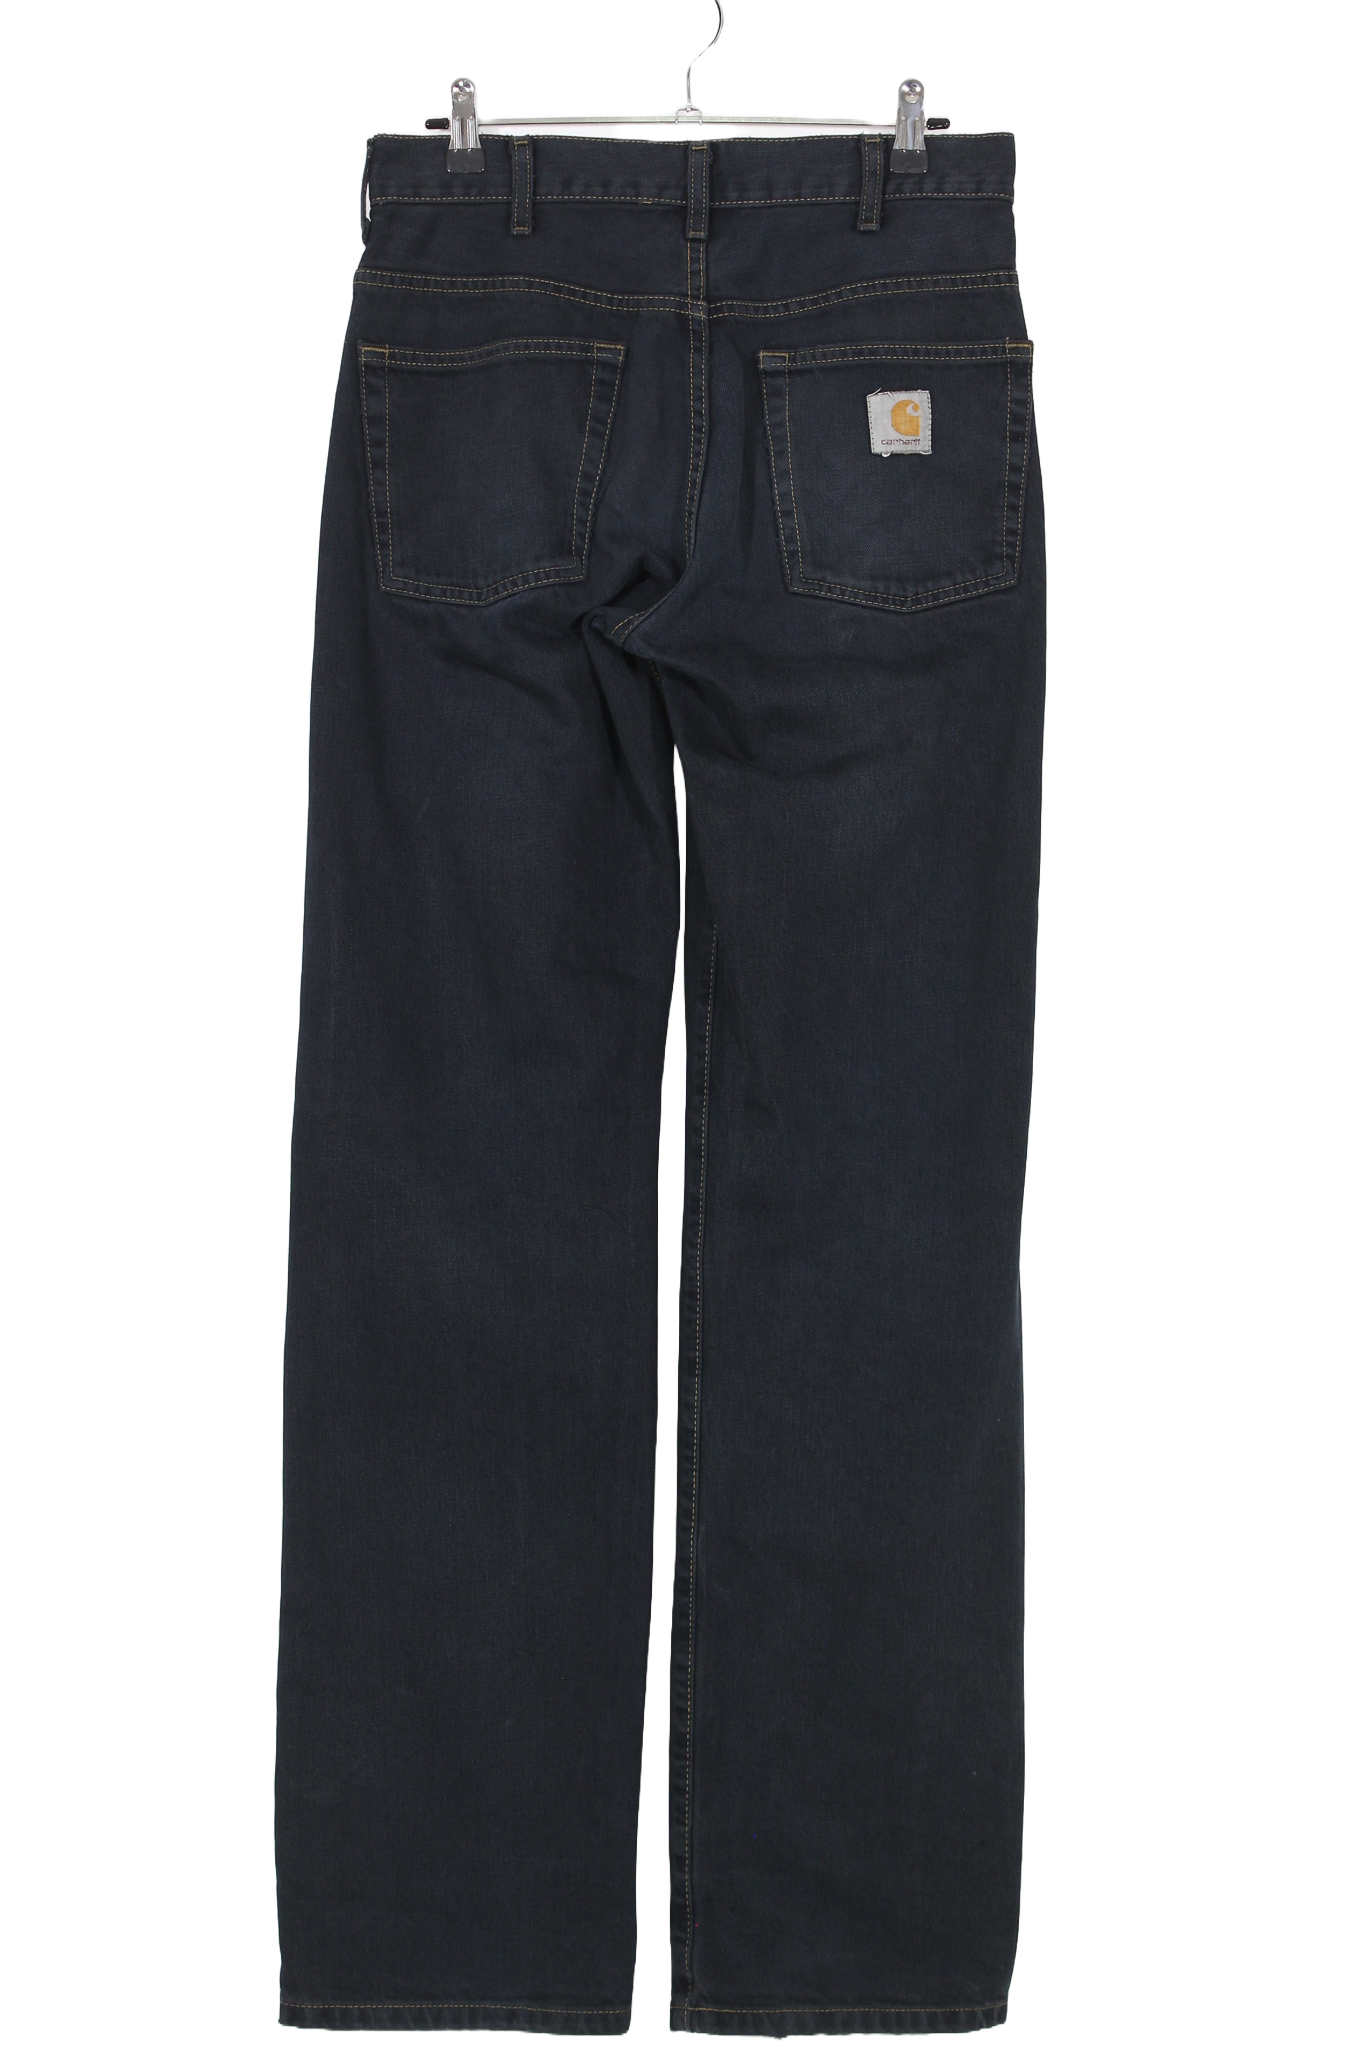 Vintage Carhartt Jeans - 28